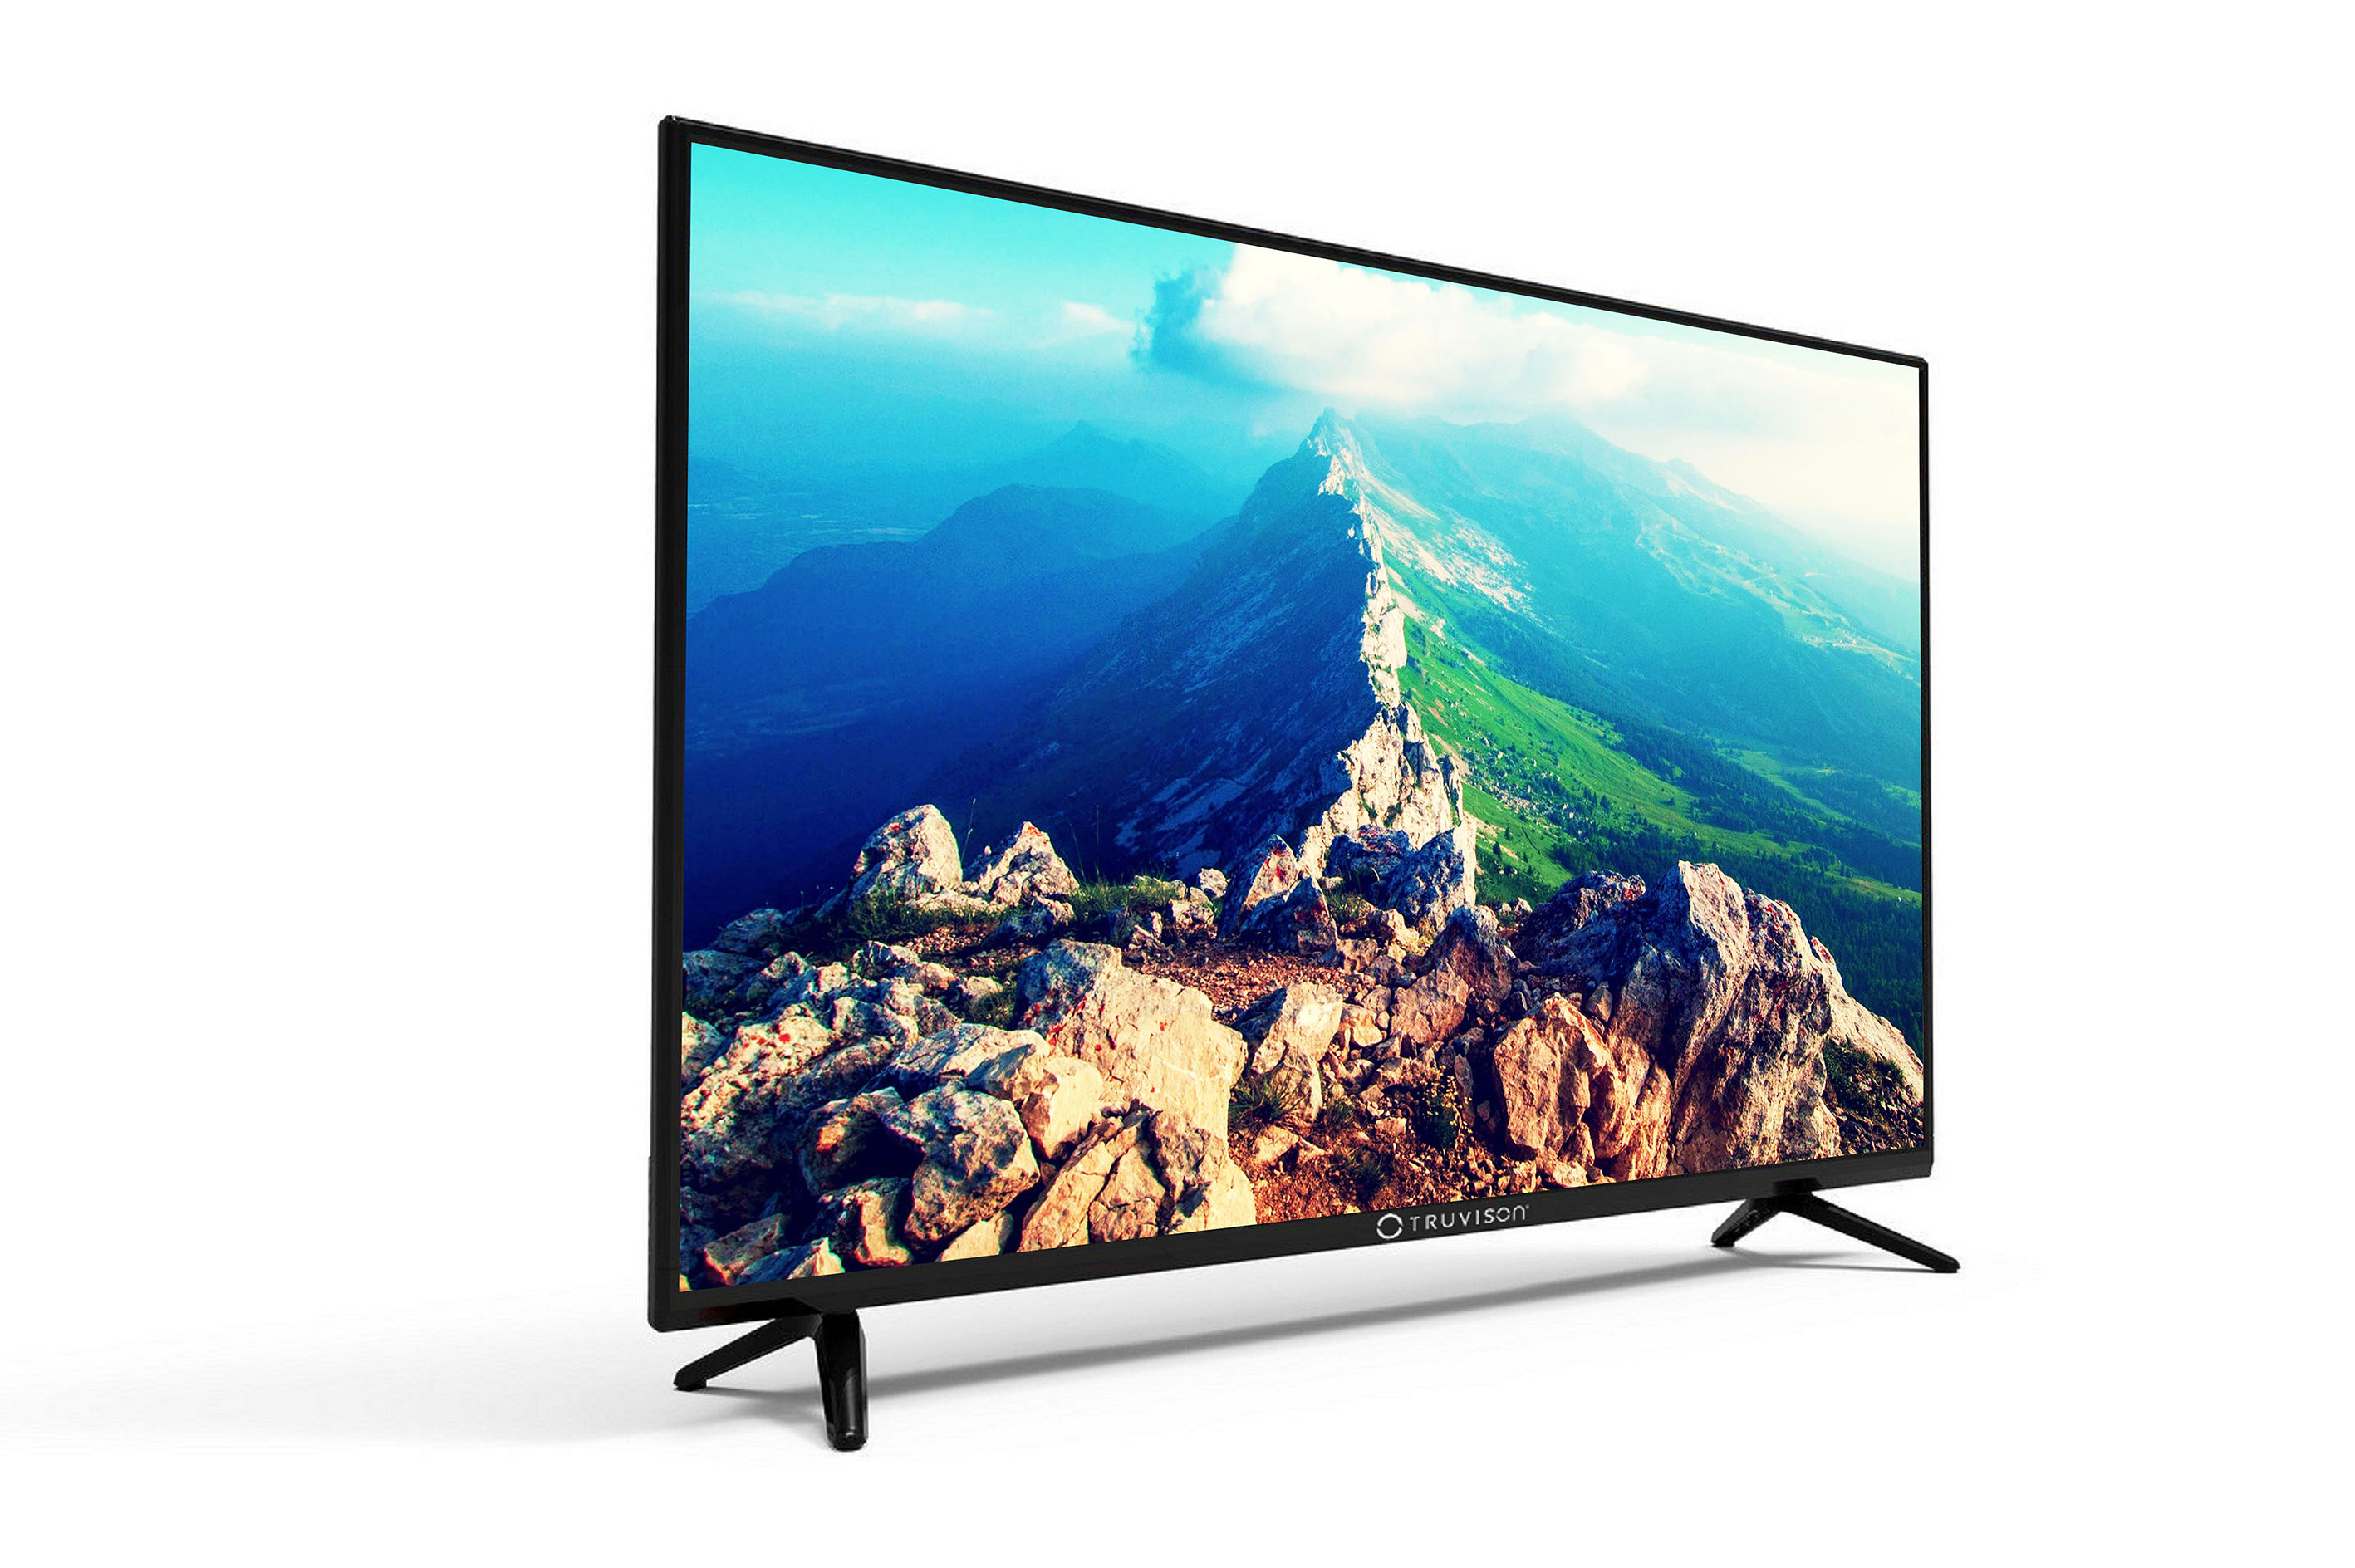 Купить телевизор смарт дешевле. Smart TV 32inch. Smart TV 32g7000. Hisense 32a4bg. Телевизор Хайсенс 32.